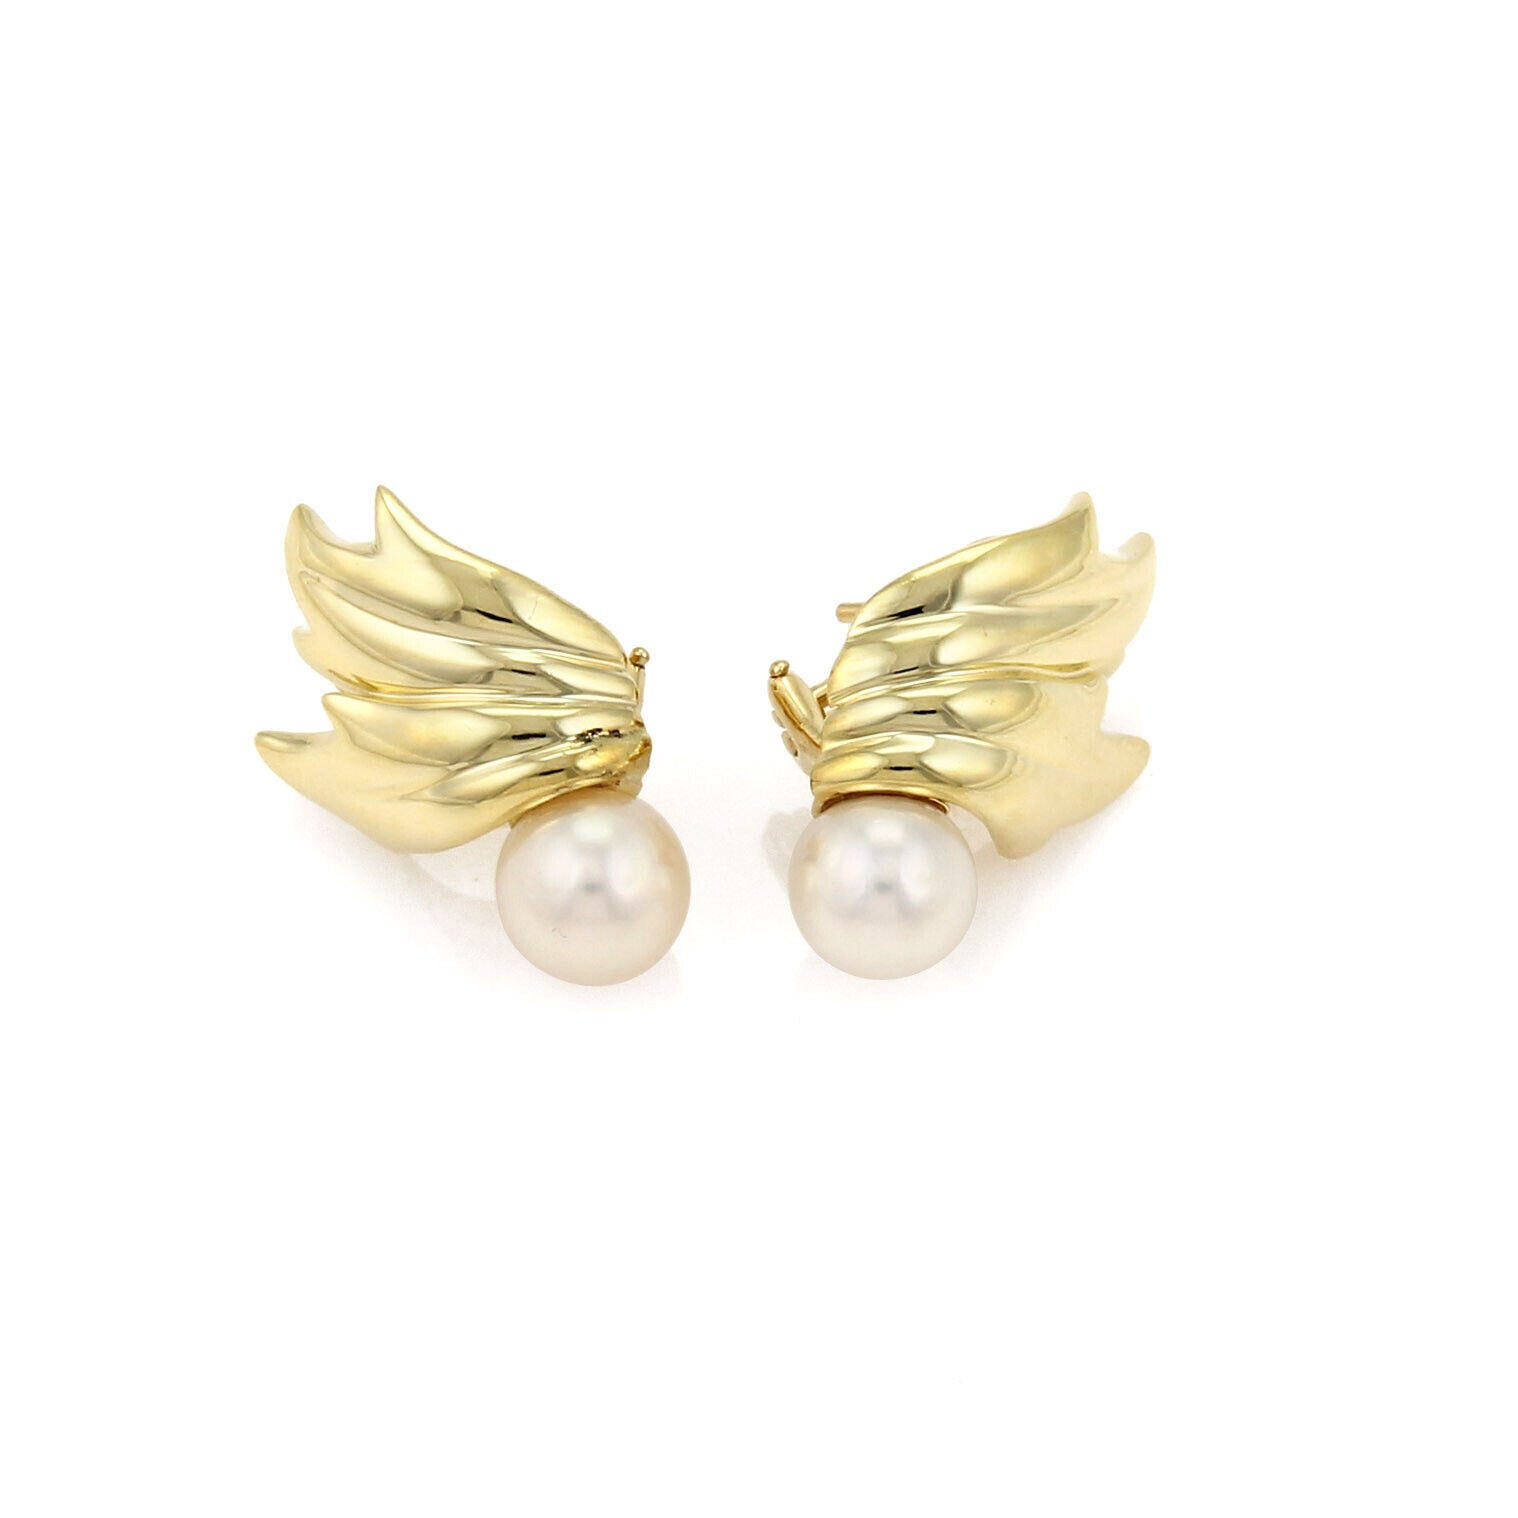 Tiffany & Co. Pearls 18k Yellow Gold Leaf Design Post Earrings | Earrings | catalog, Designer Jewelry, Earrings, Tiffany & Co. | Tiffany & Co.